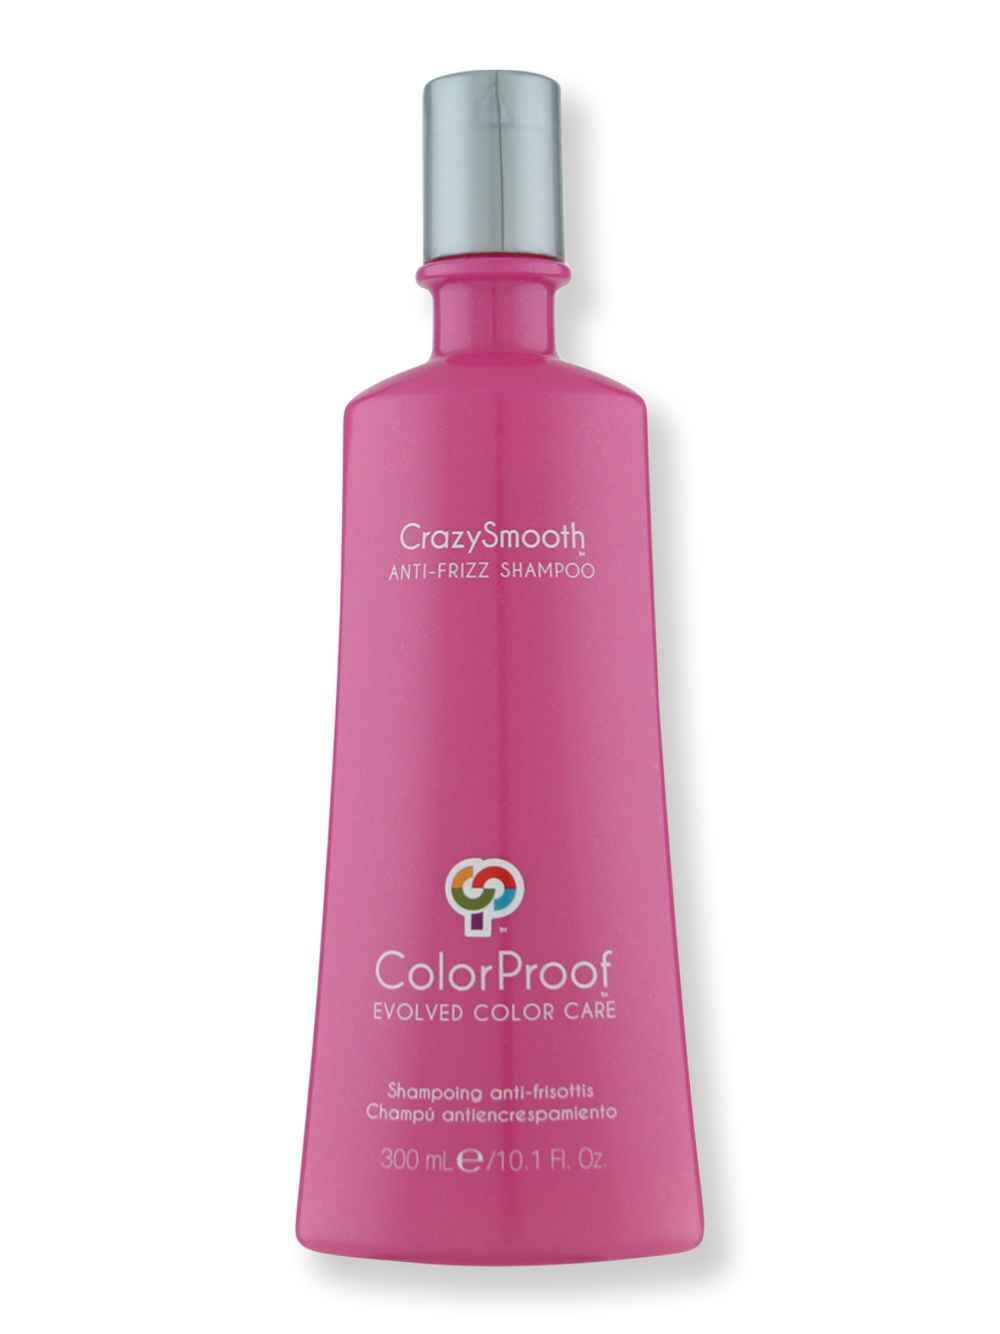 ColorProof CrazySmooth Anti-Frizz Shampoo 10.1 oz